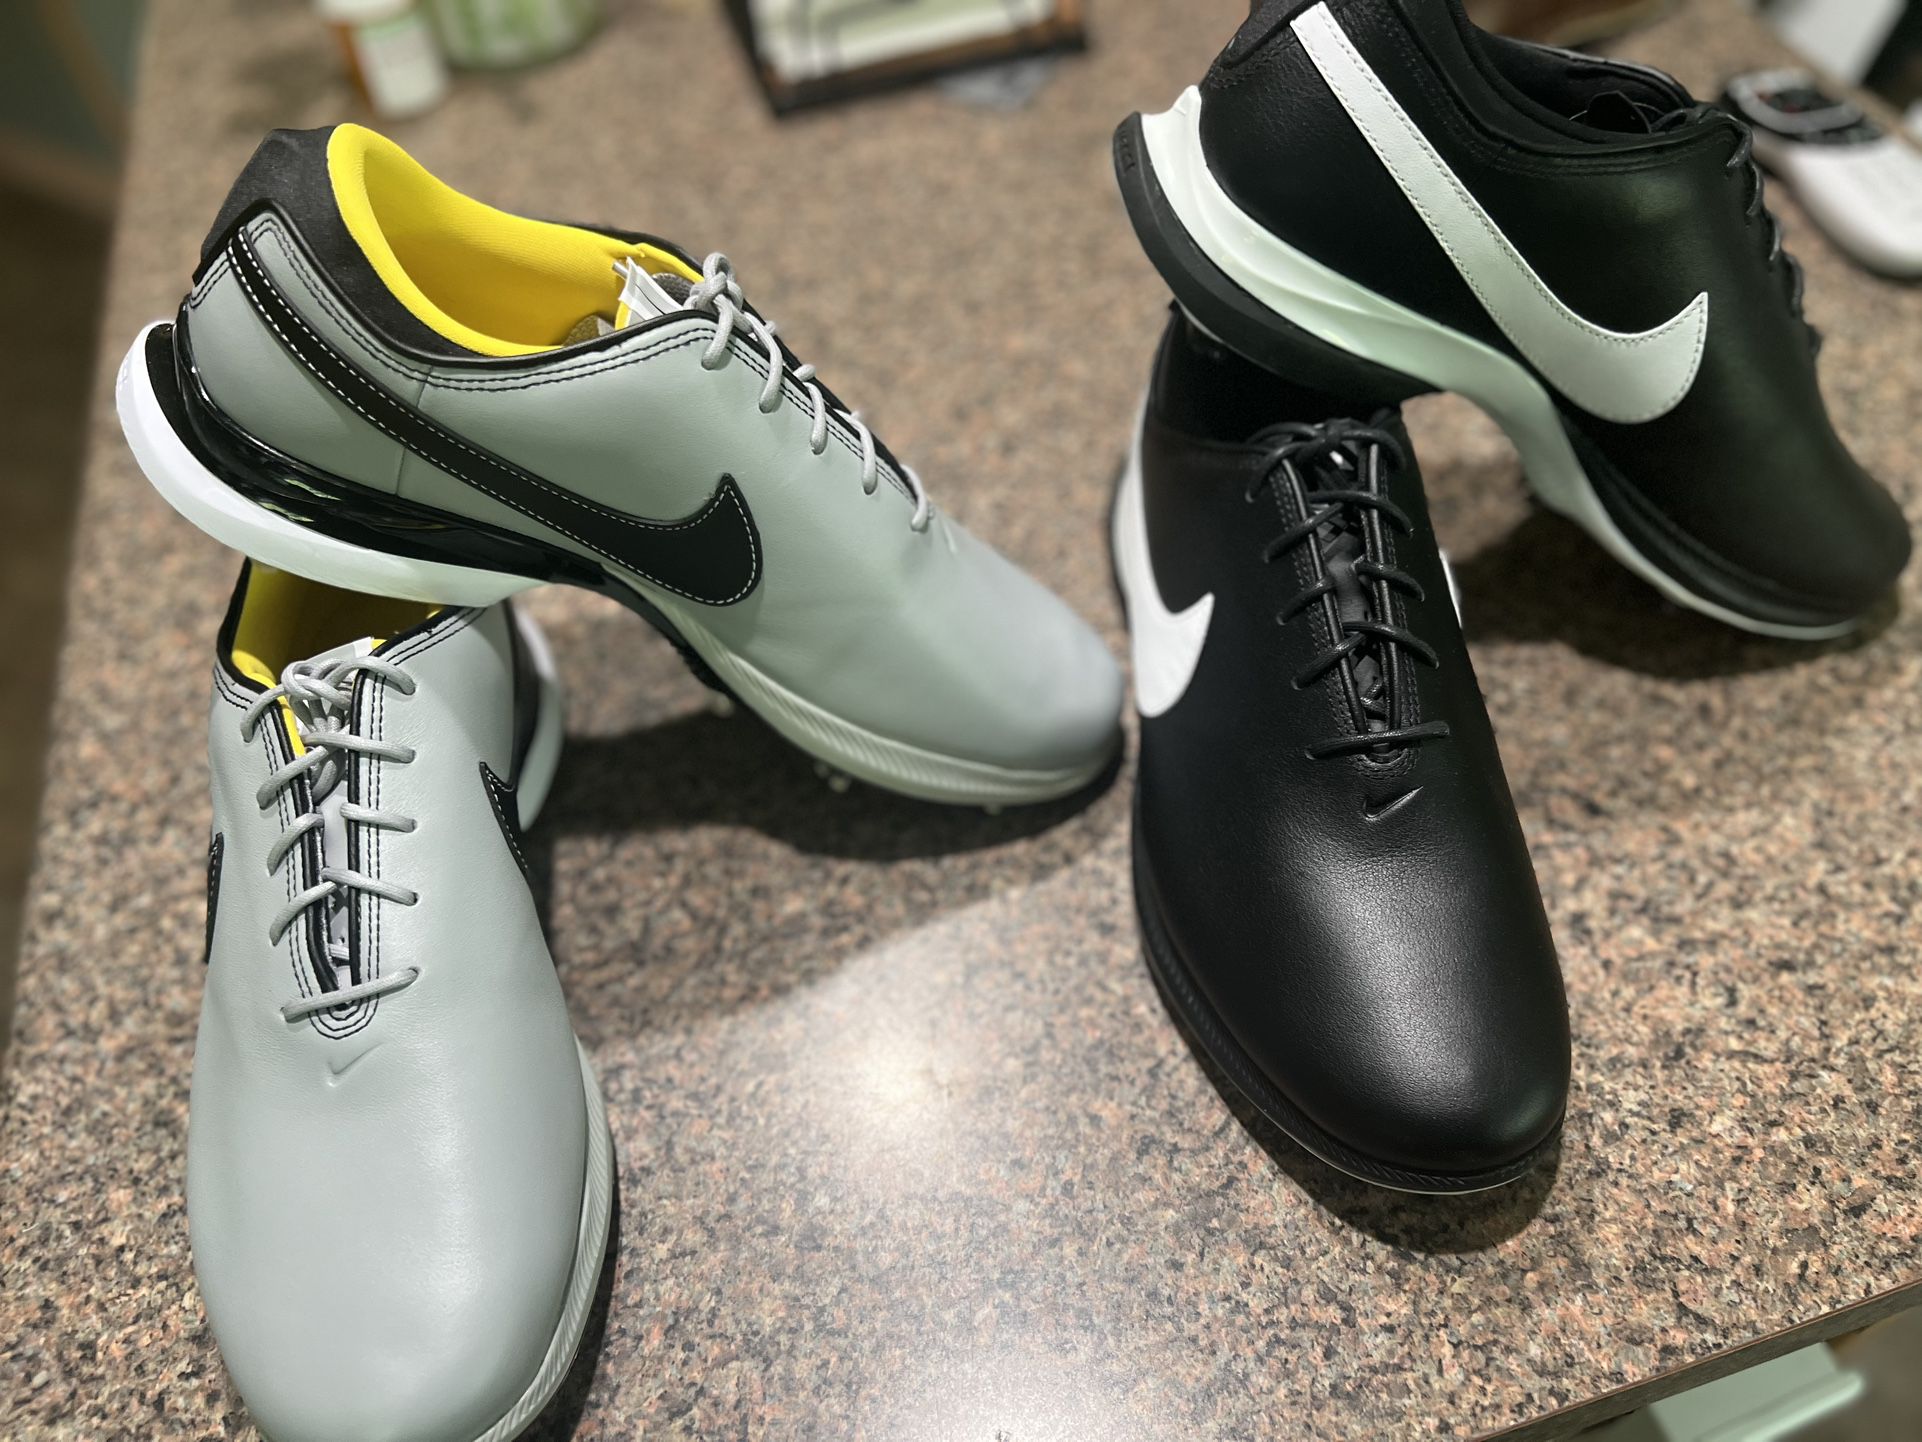 Nike Golf Shoes, gray size 12, black size 13, Sweet, $89 each